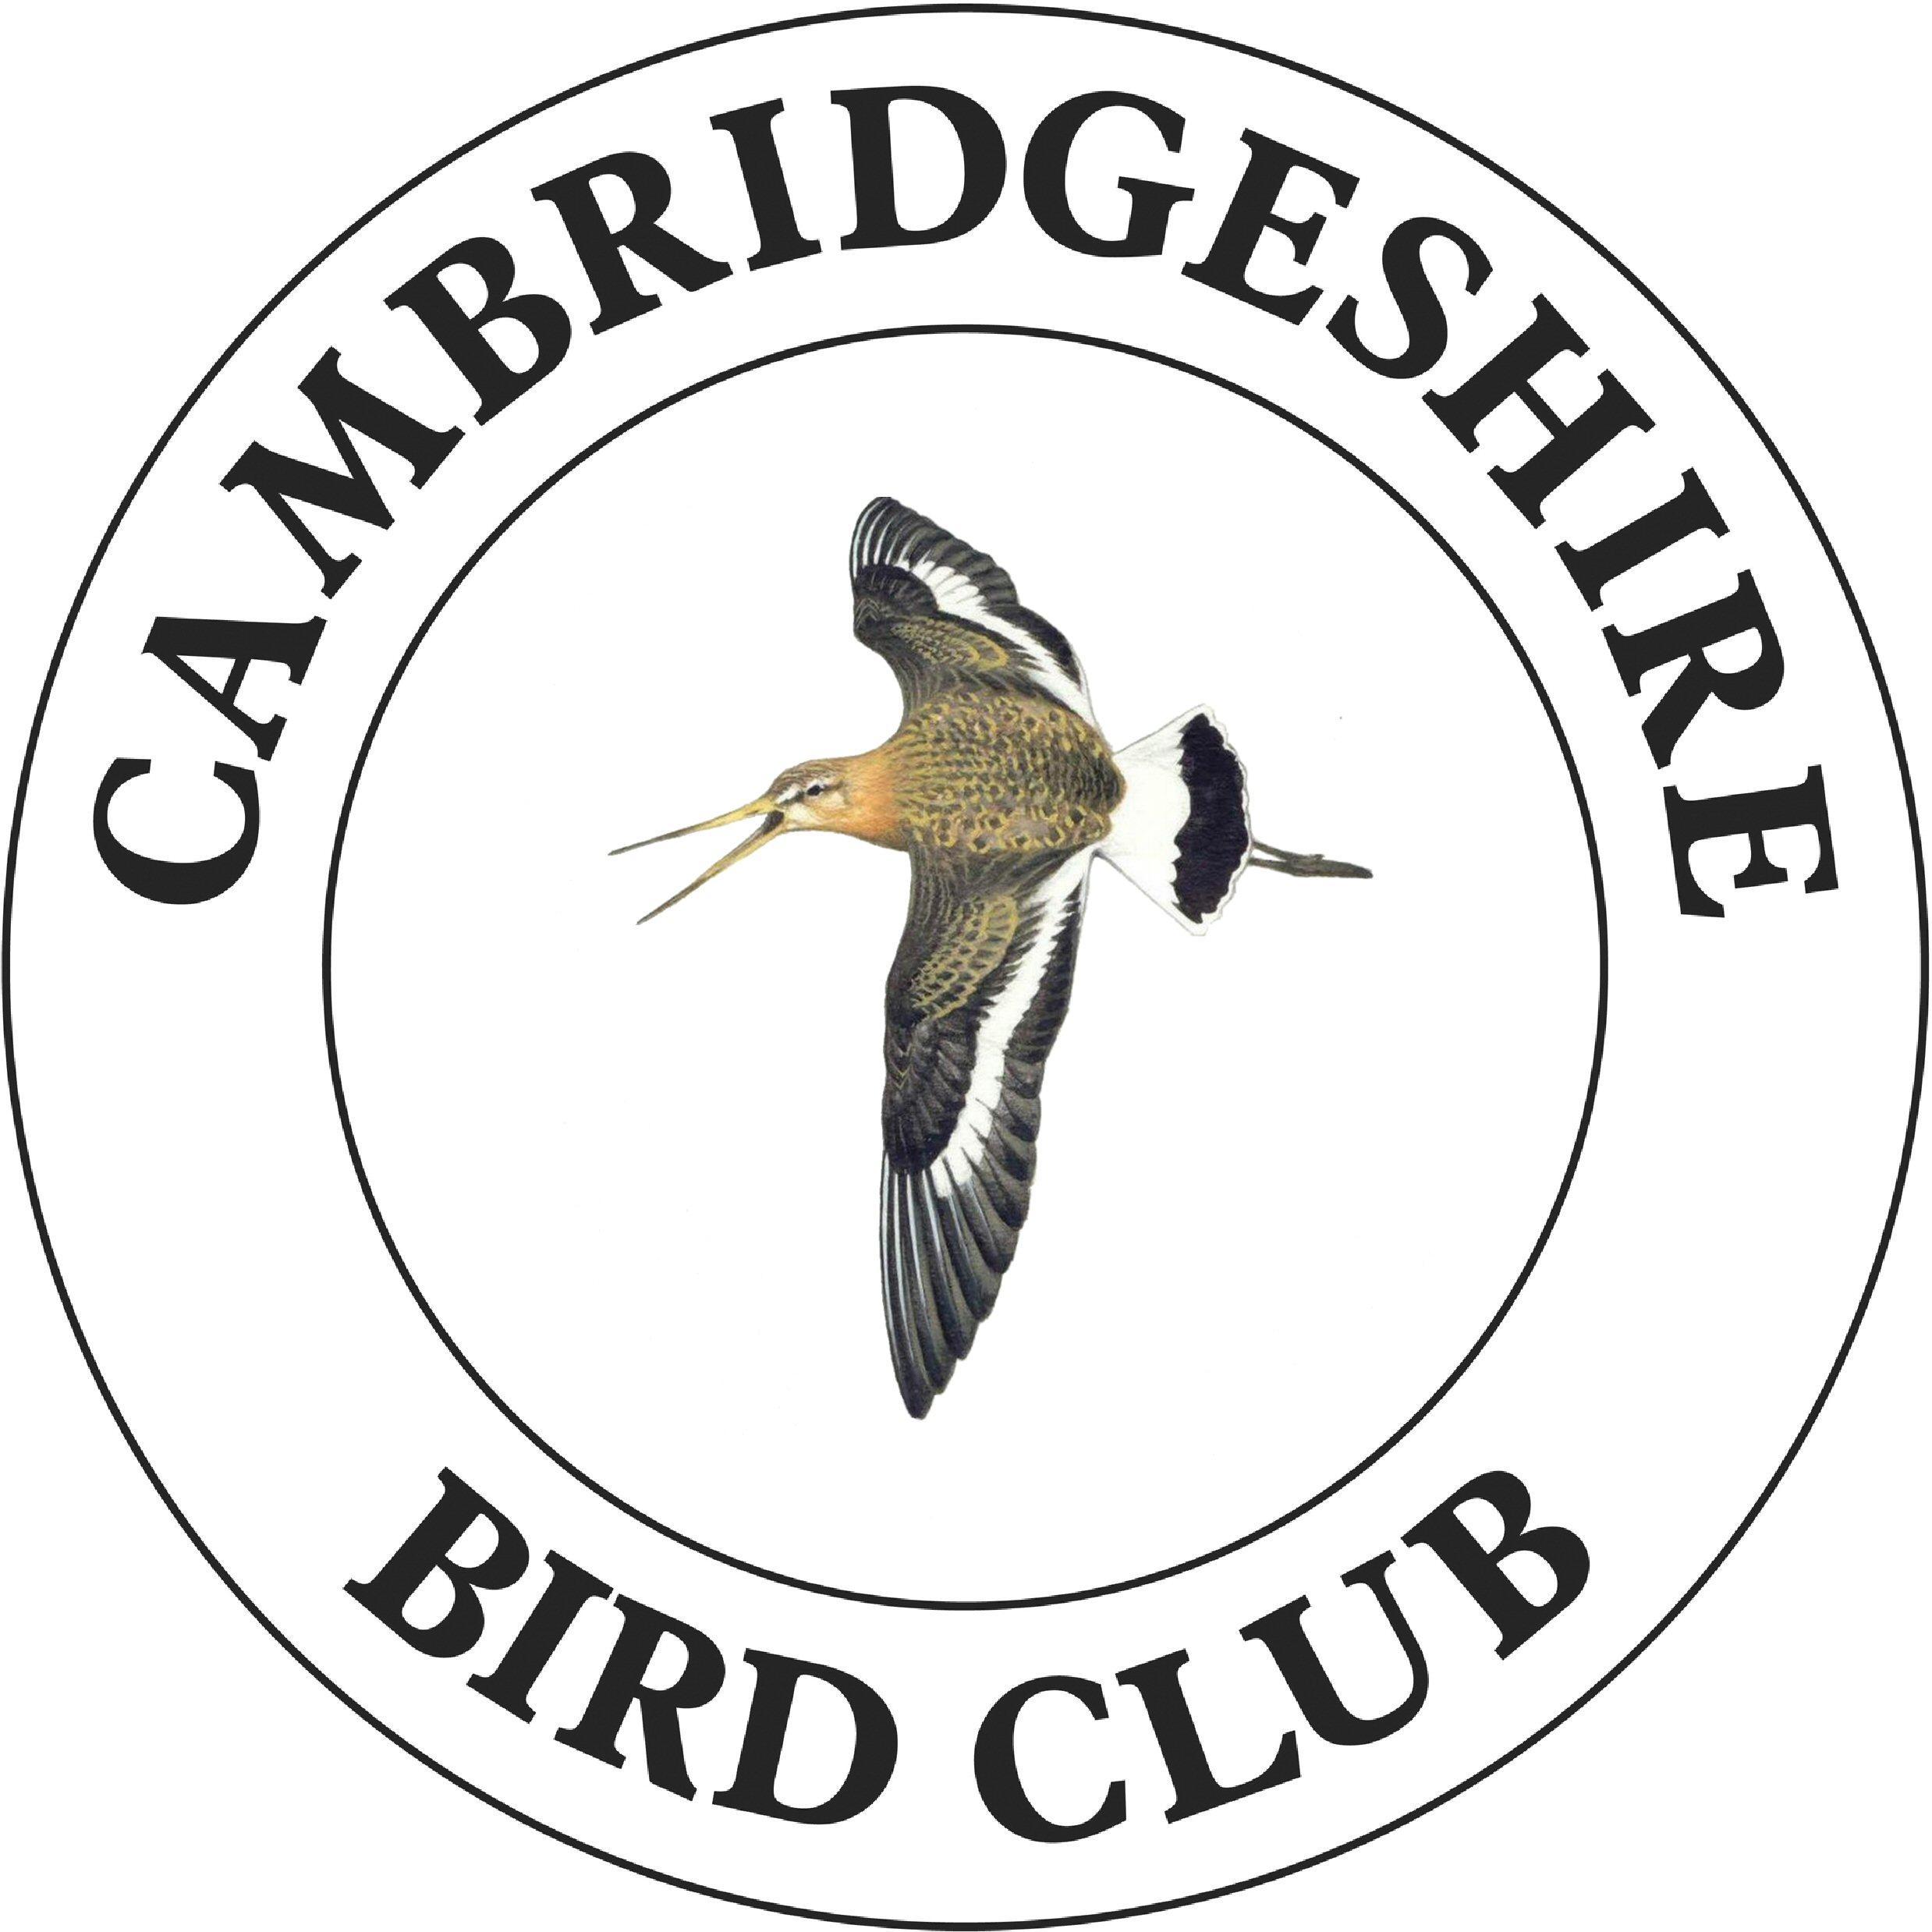 Cambs Bird Club